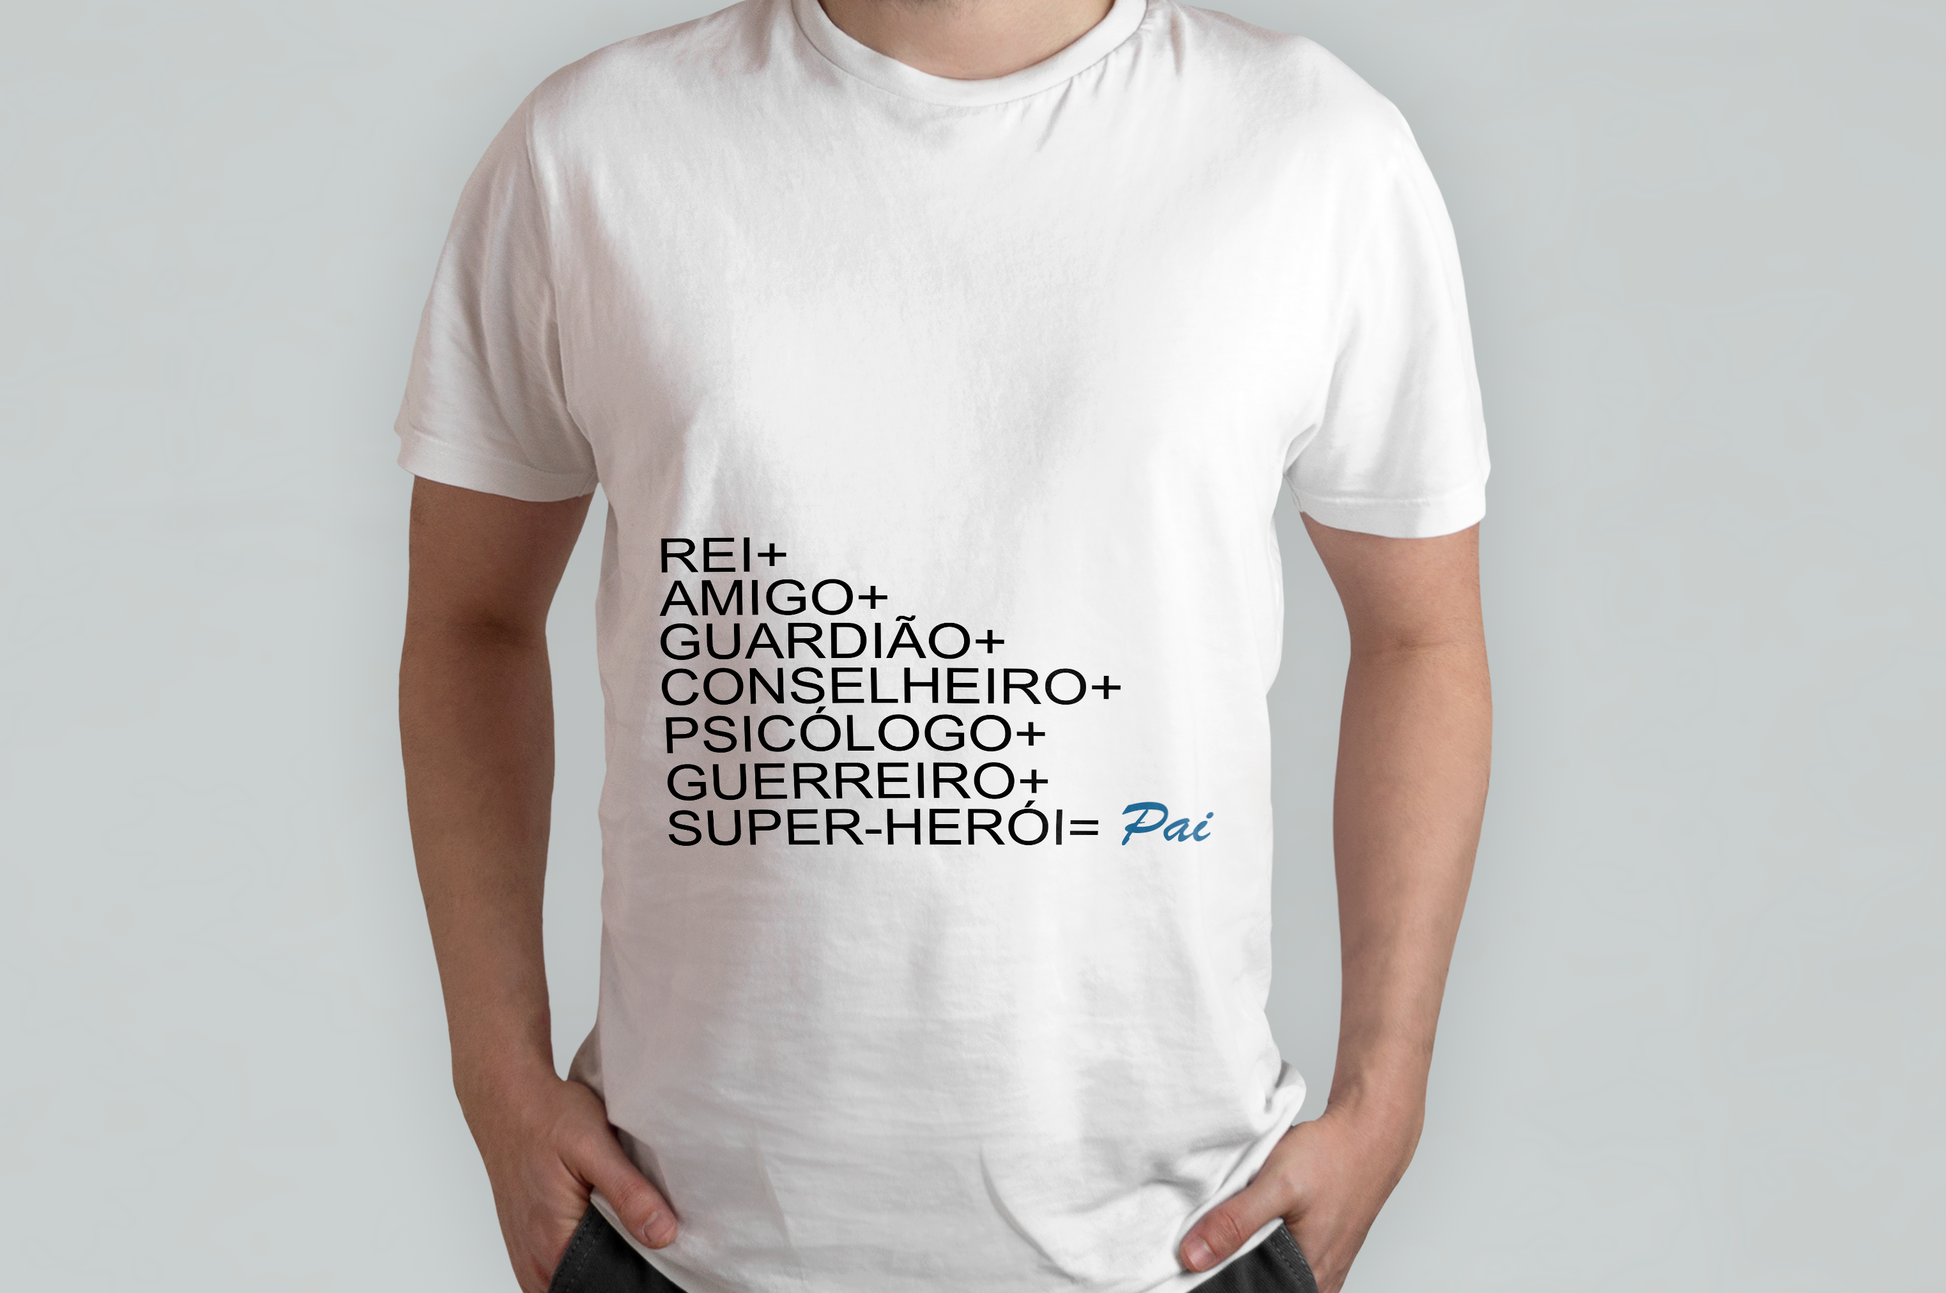 Camisa Pai Clássico Dry Photo